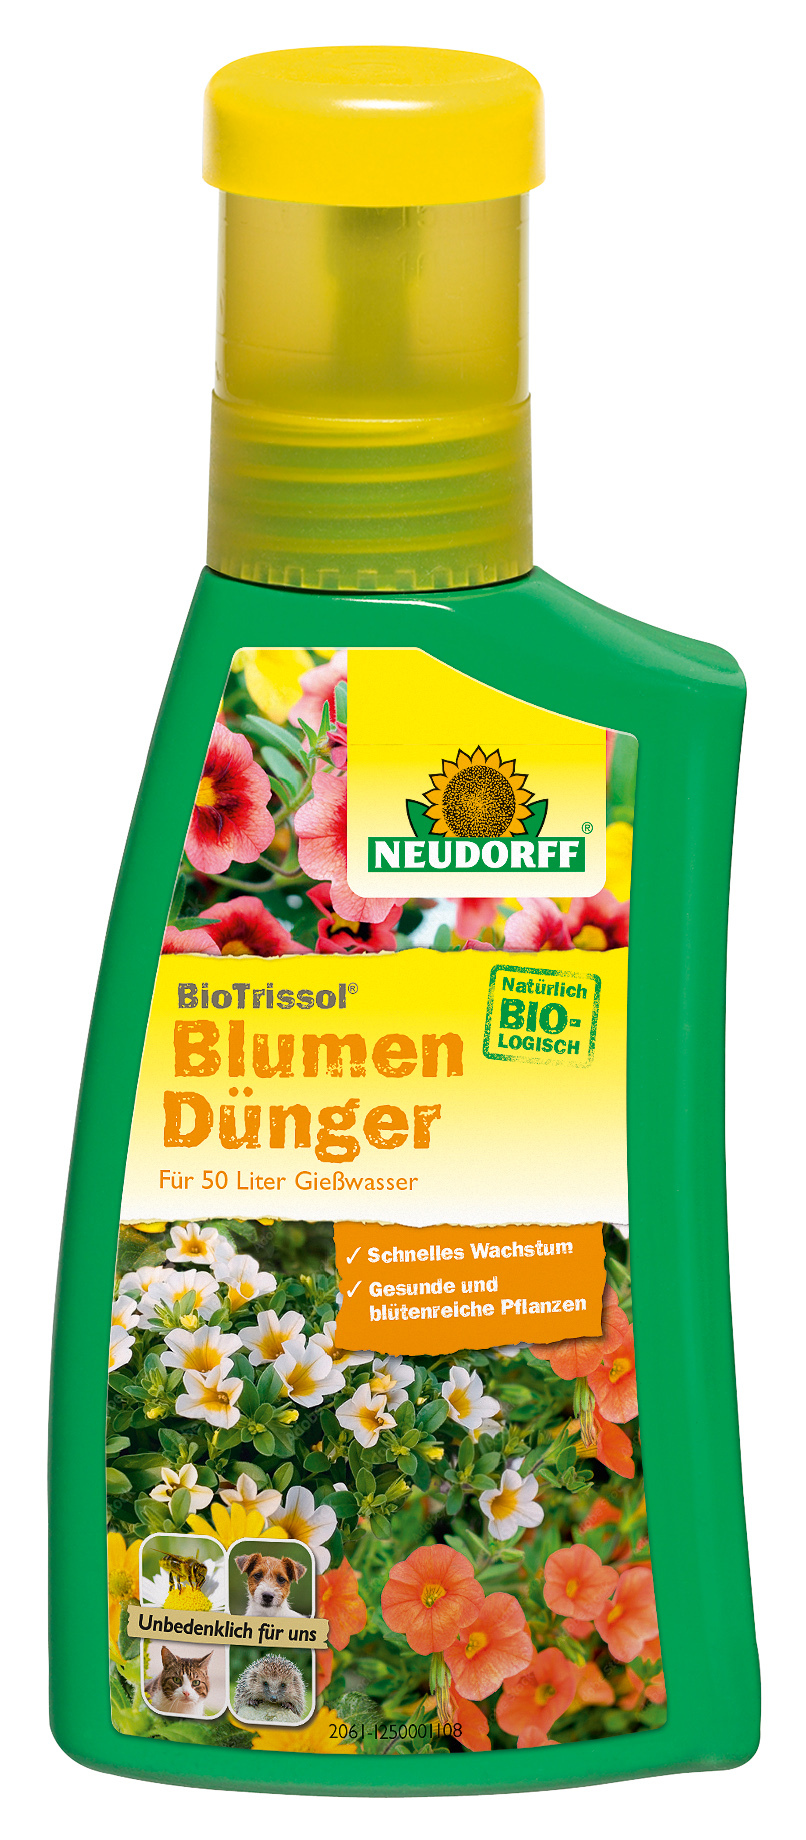 W. Neudorff GmbH KG BioTrissol Blumen-Dünger